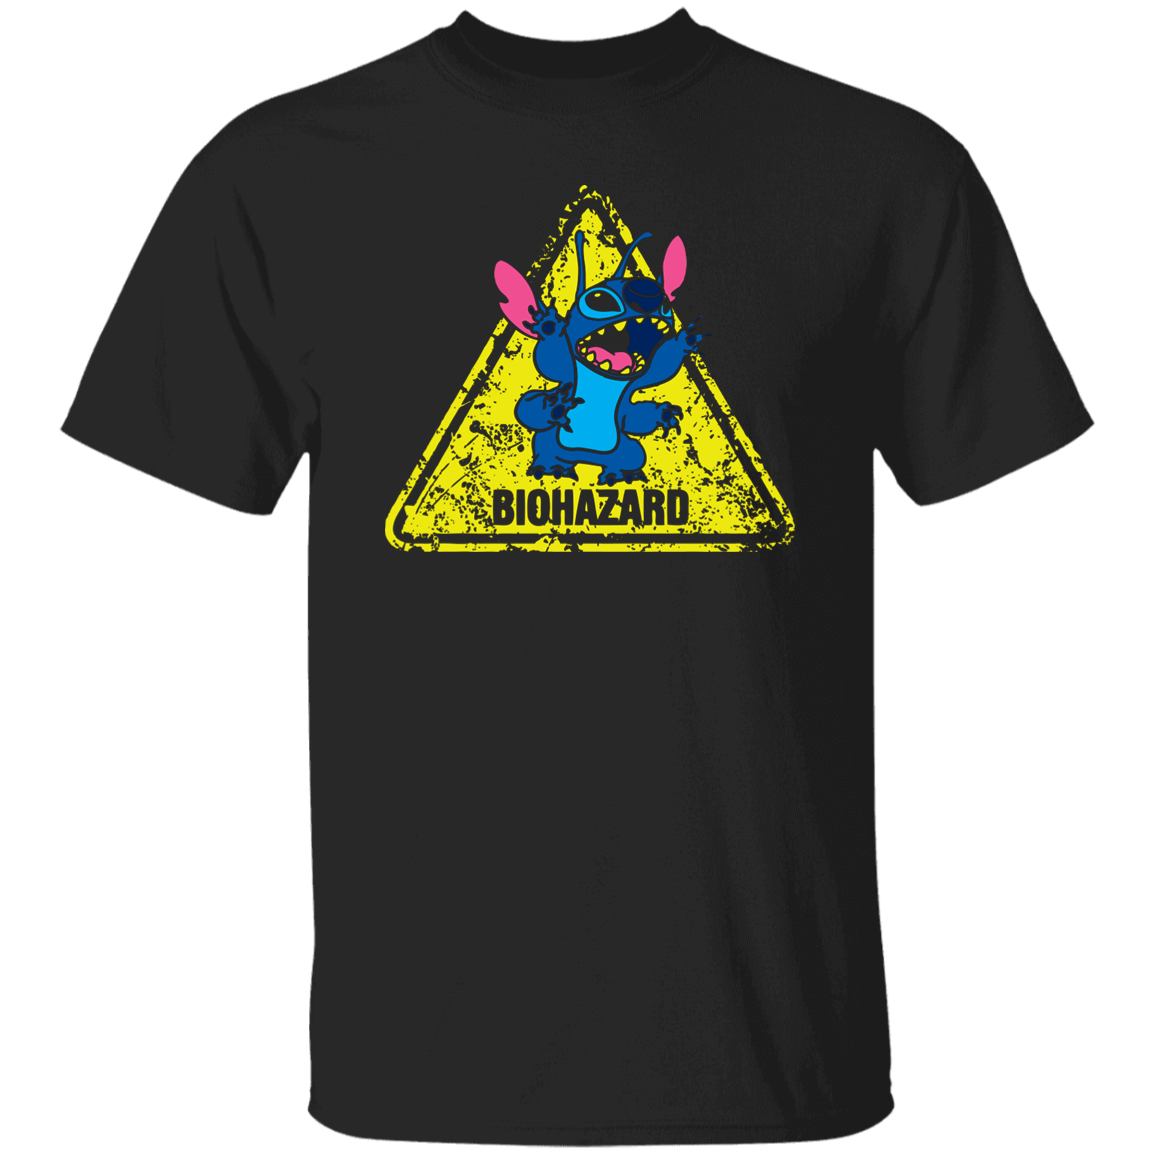 Biohazard T-Shirt